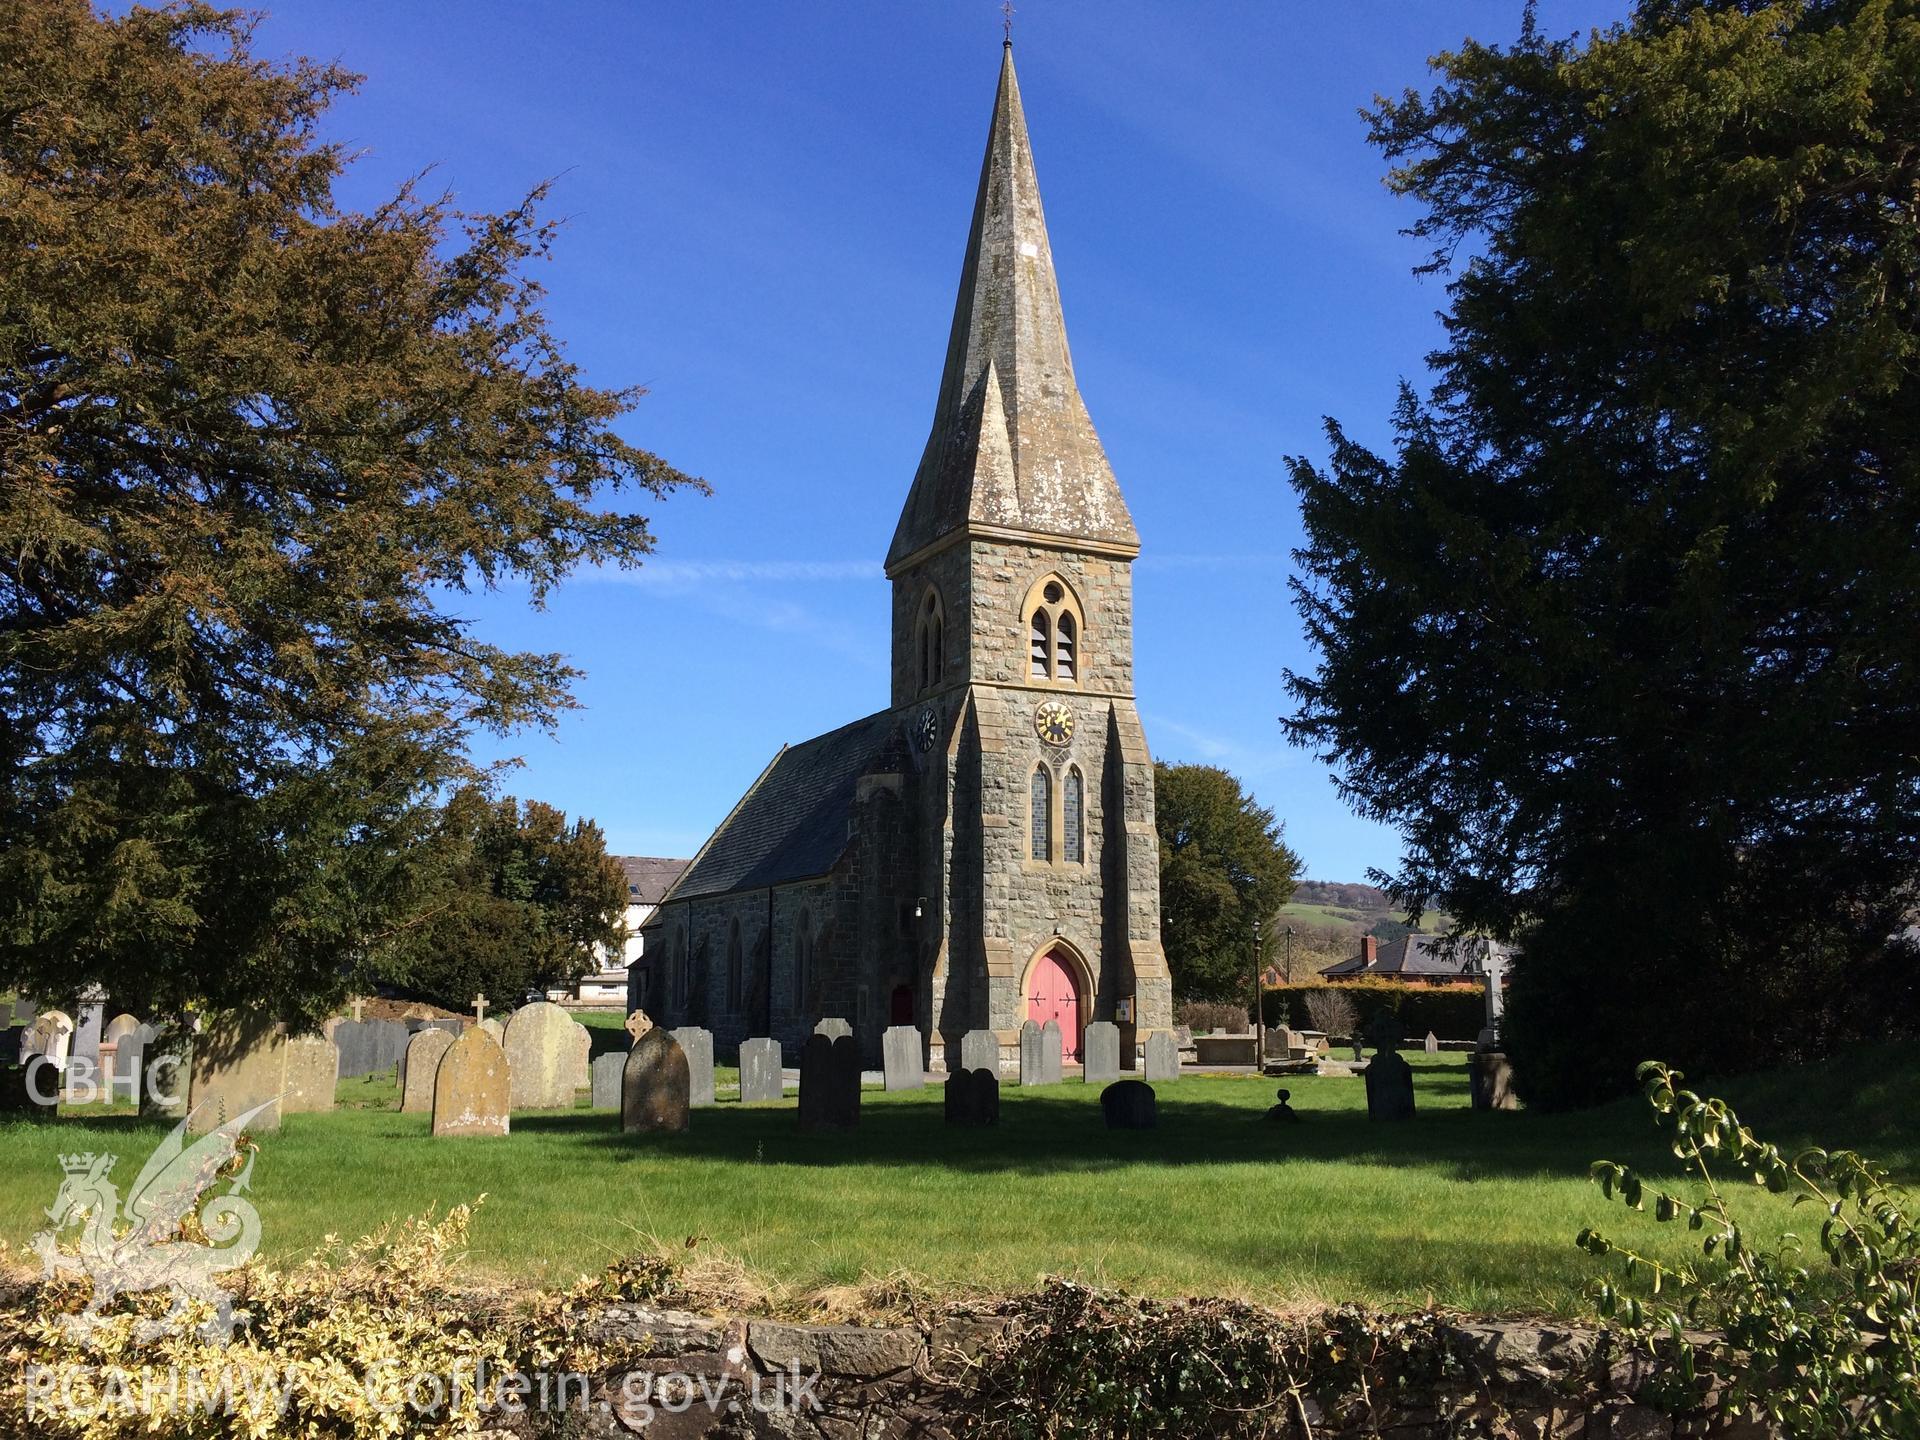 Colour photo showing view of St. Garmon's Church, Castle Caereinion, taken by Paul R. Davis, 2018.